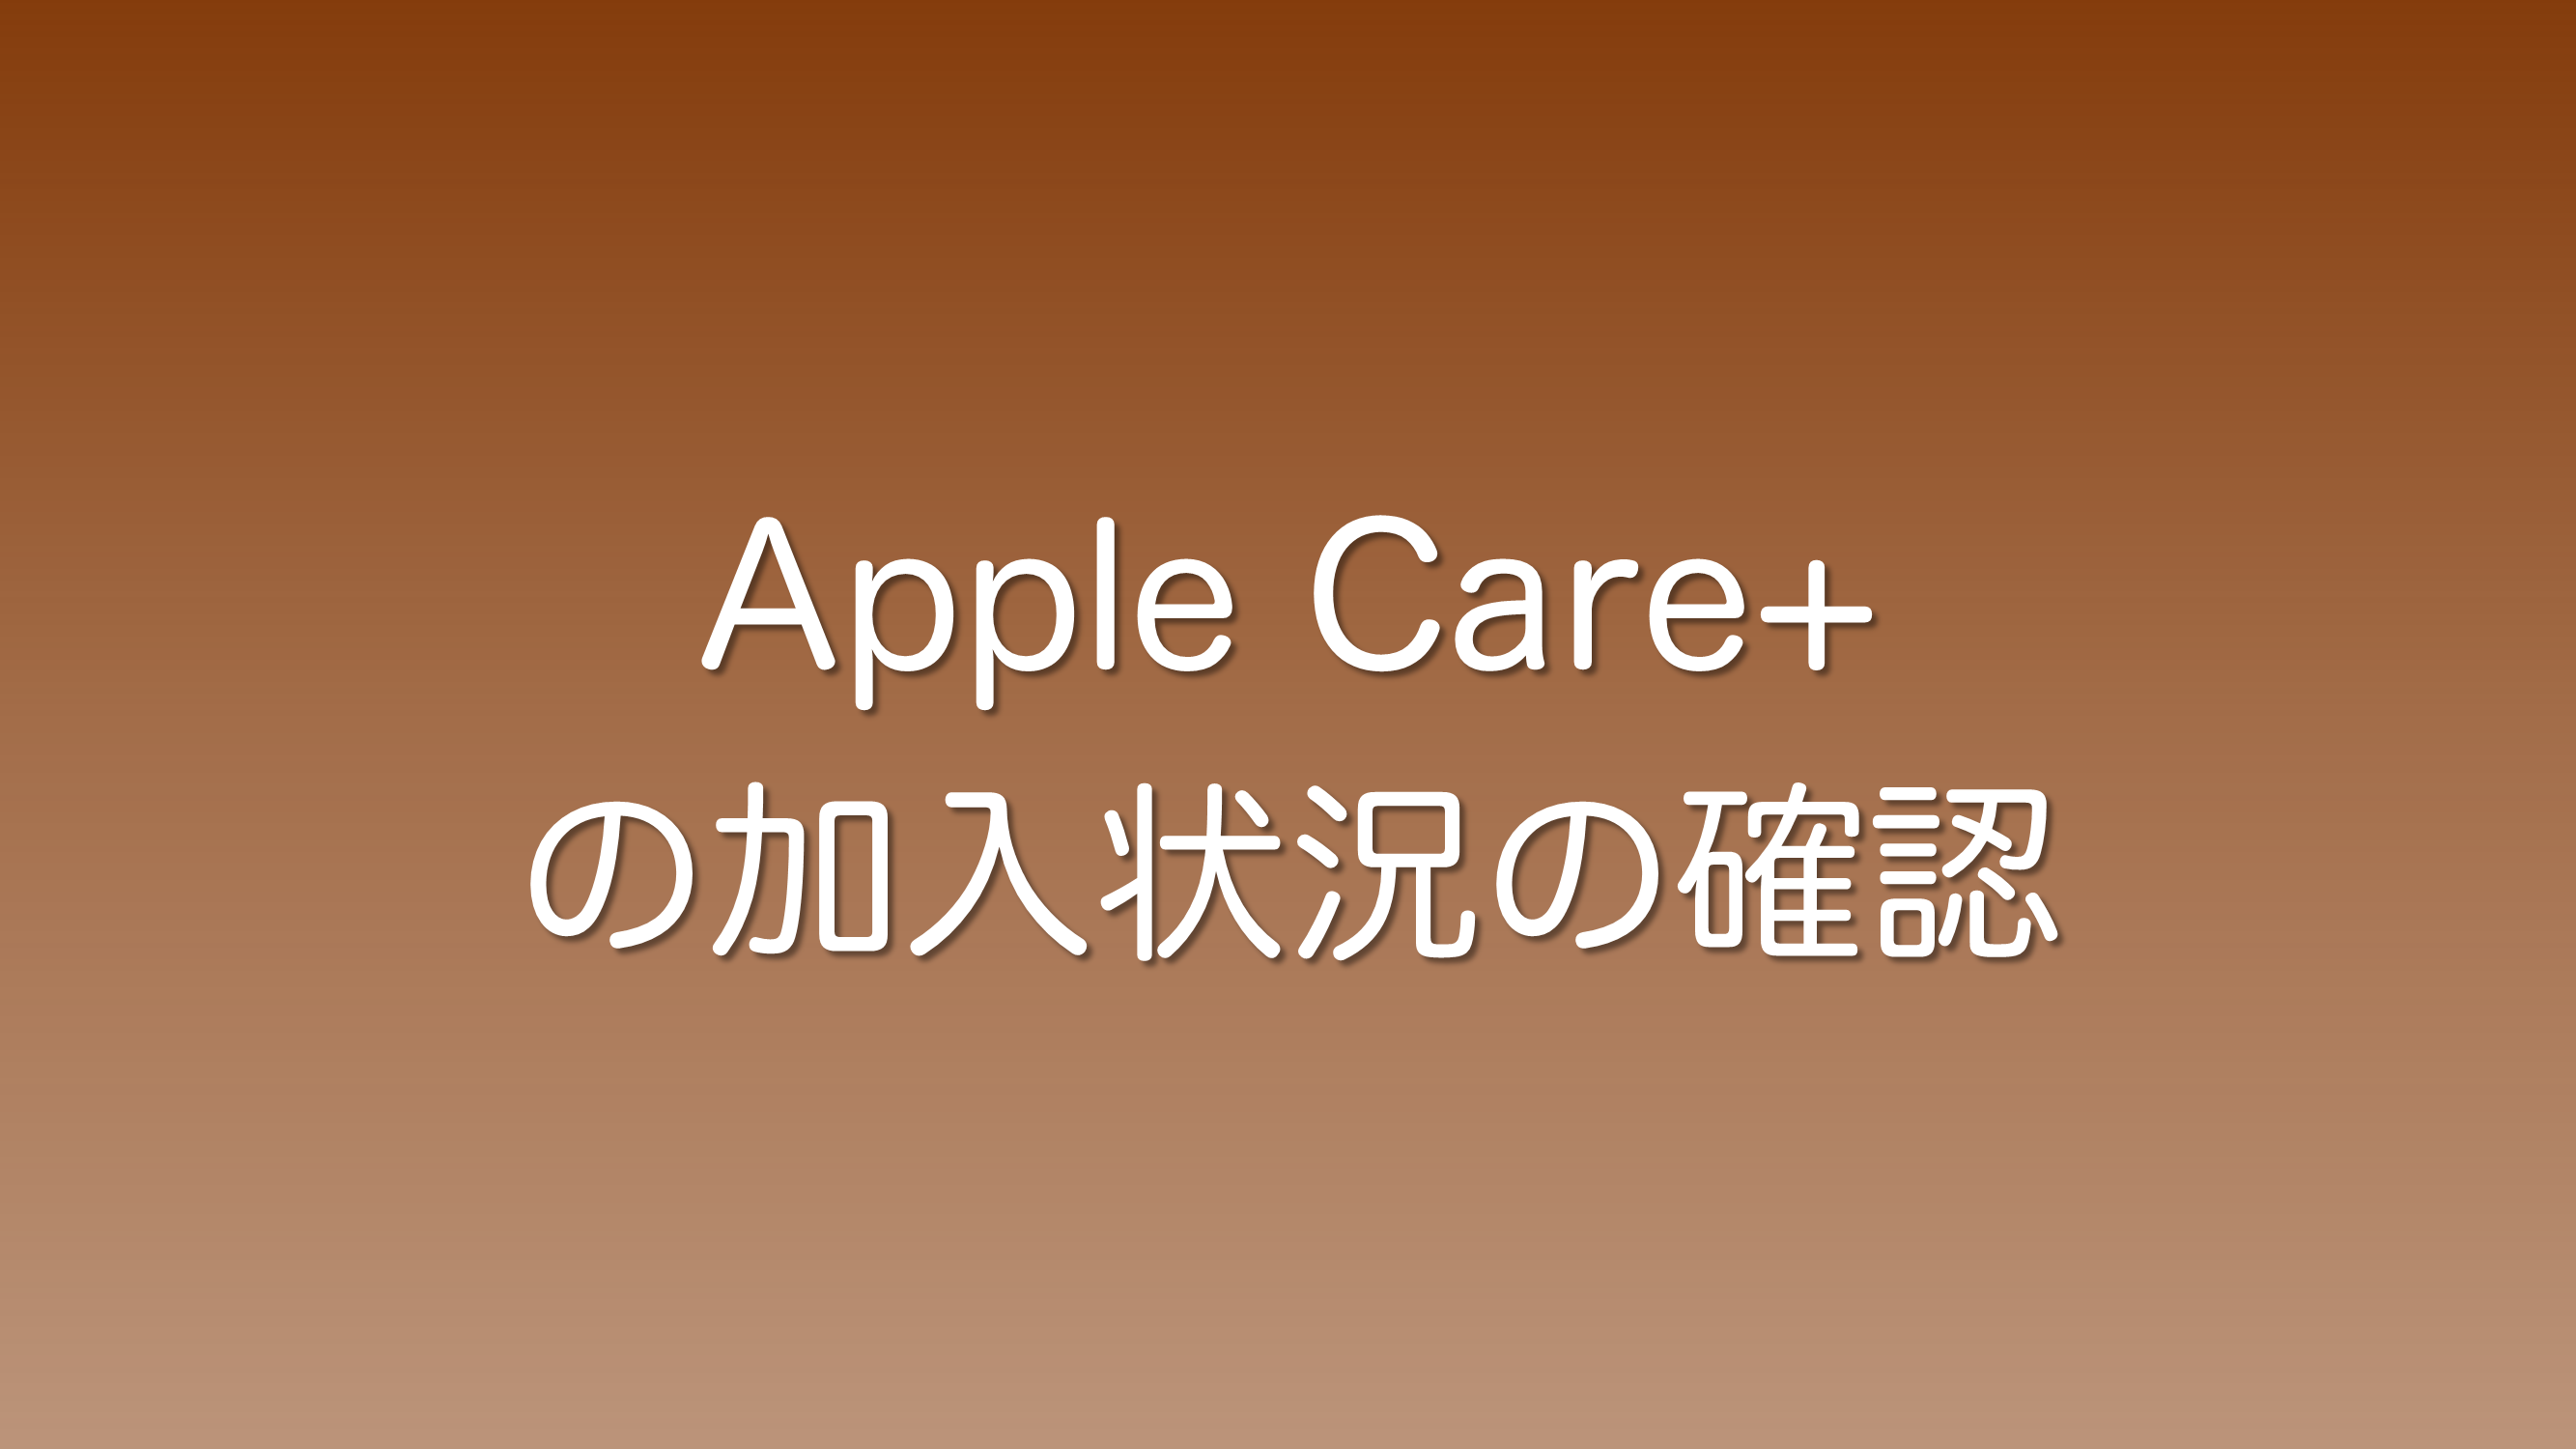 Apple Care+の加入状況の確認方法